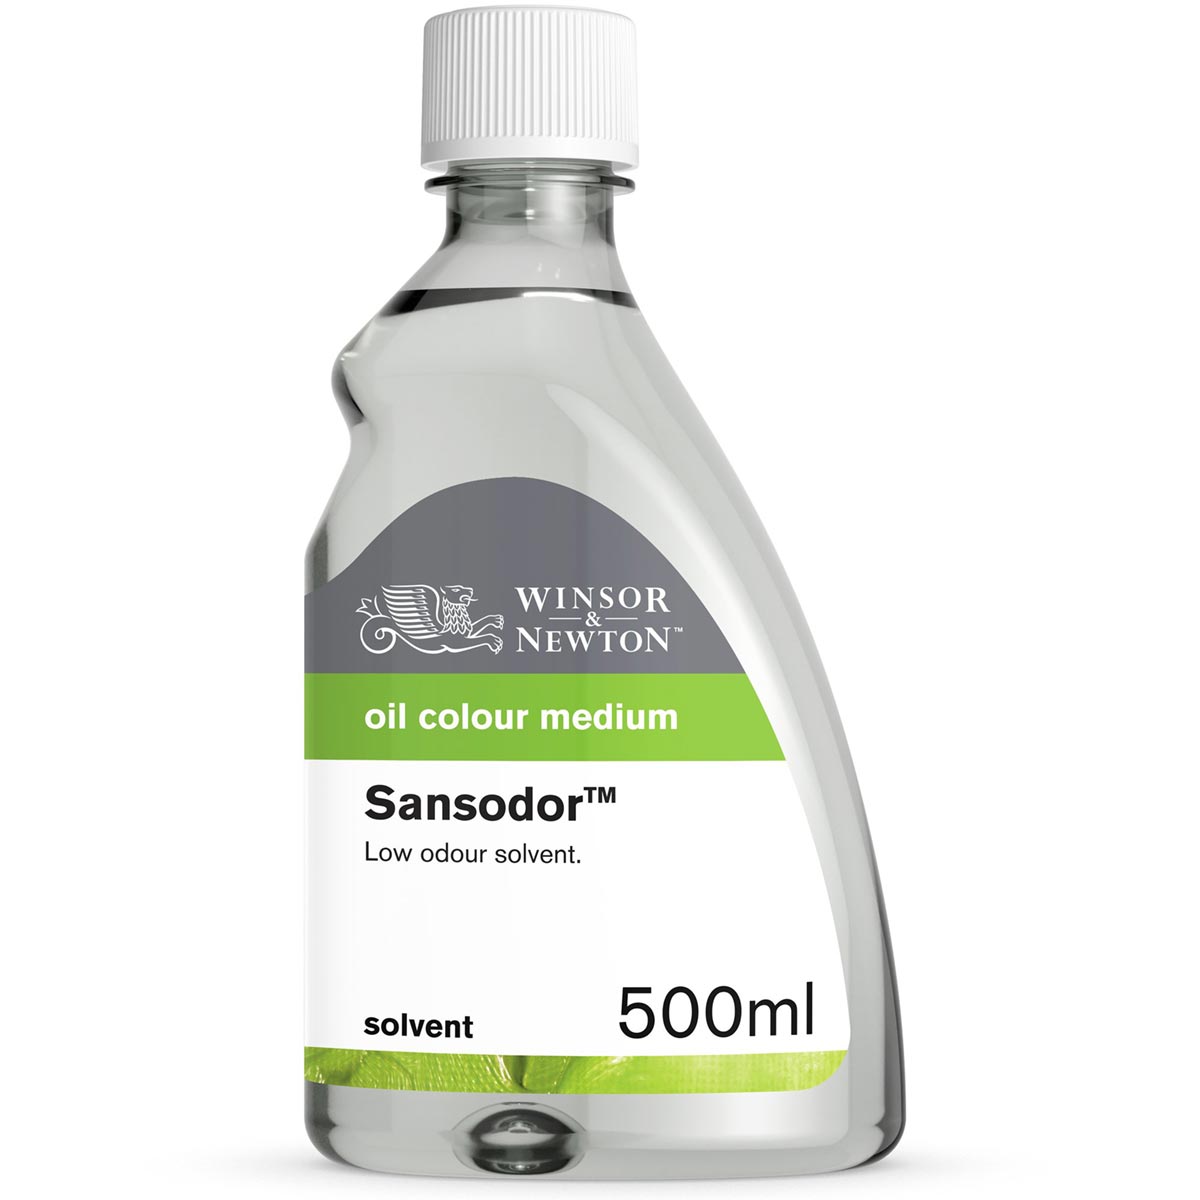 Winsor et Newton - Sansodor Low Odor Solvent Cleaner - 500 ml